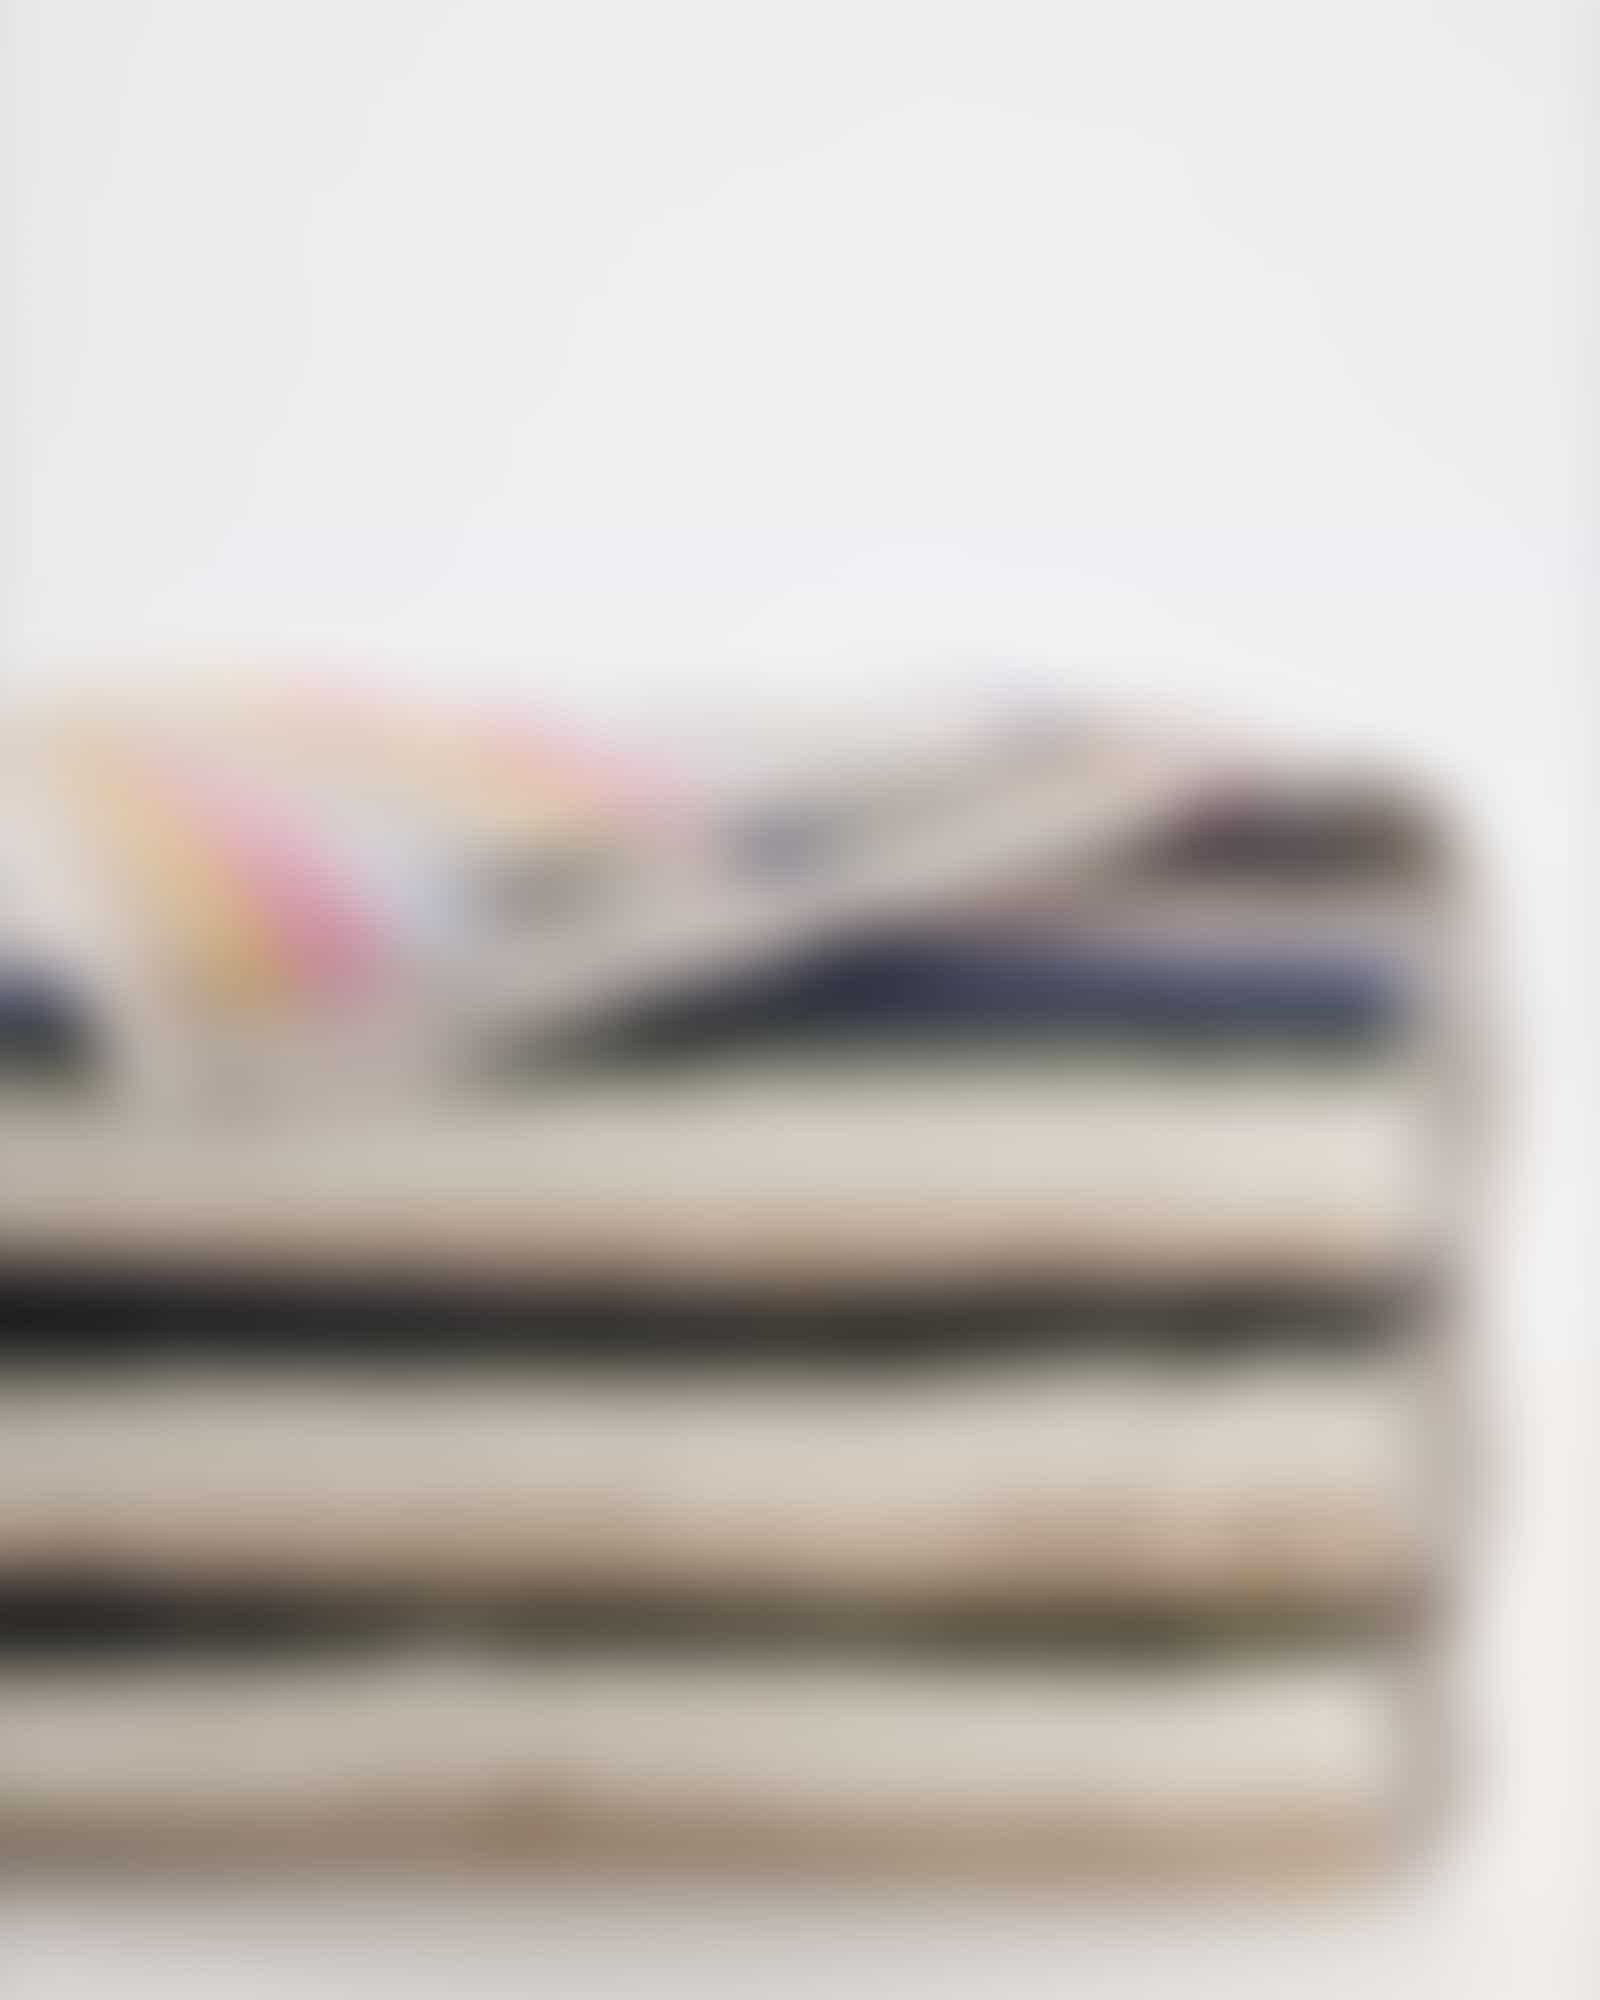 Villeroy &amp; Boch Handtücher Coordinates Stripes 2551 - Farbe: multicolor - 12 - Seiflappen 30x30 cm